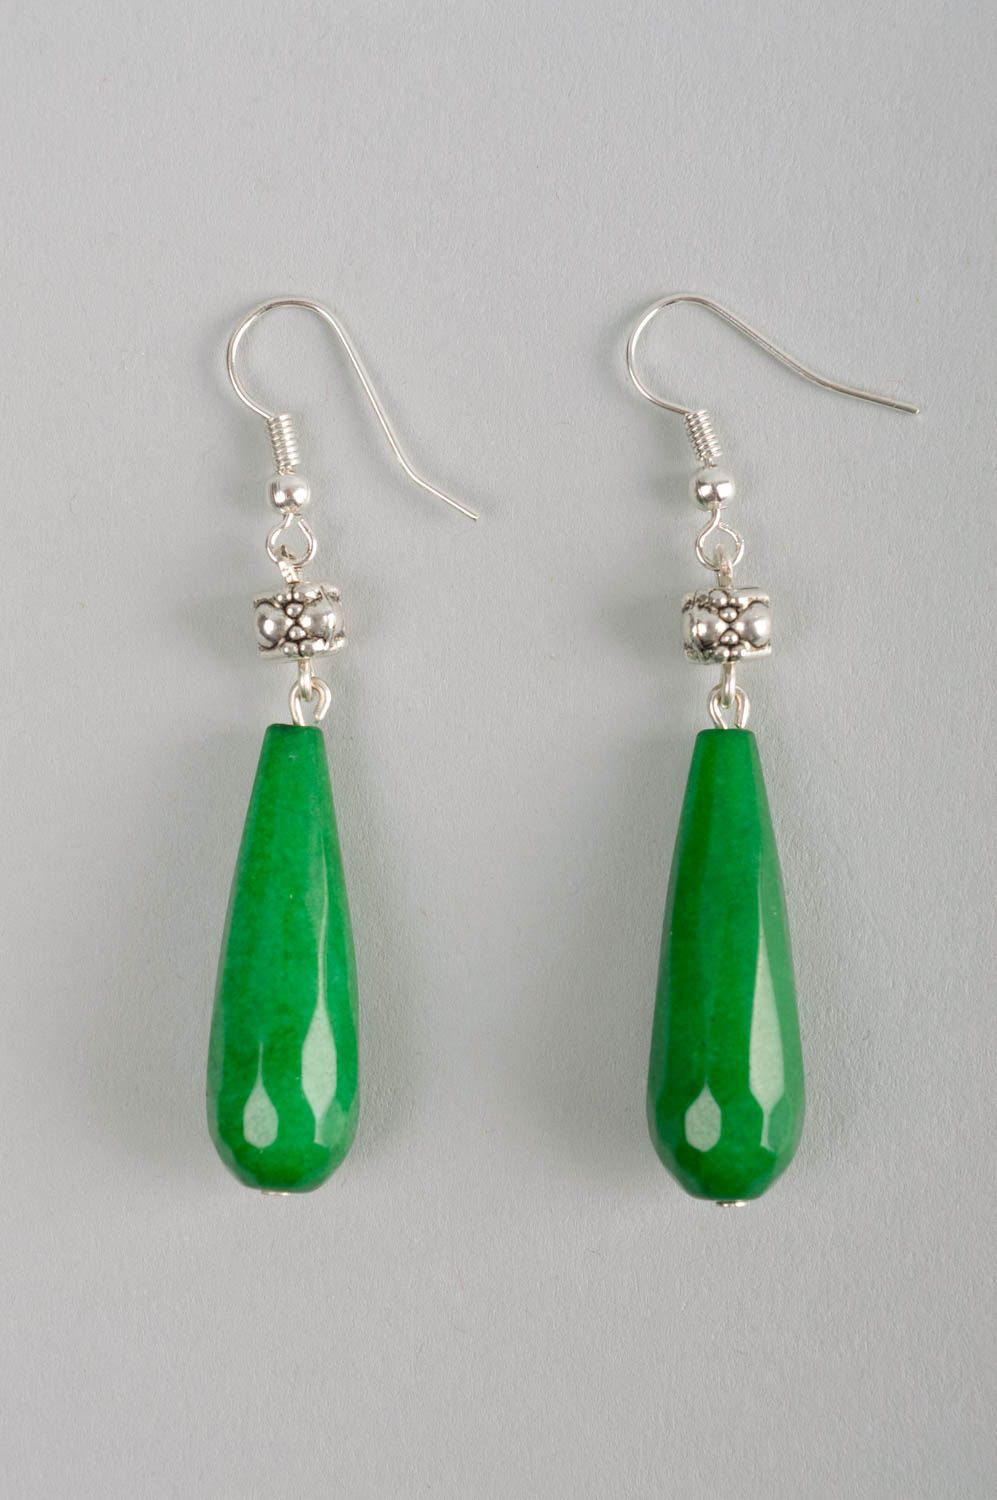 Handmade gemstone earrings bead earrings artisan jewelry designs gifts for her photo 3